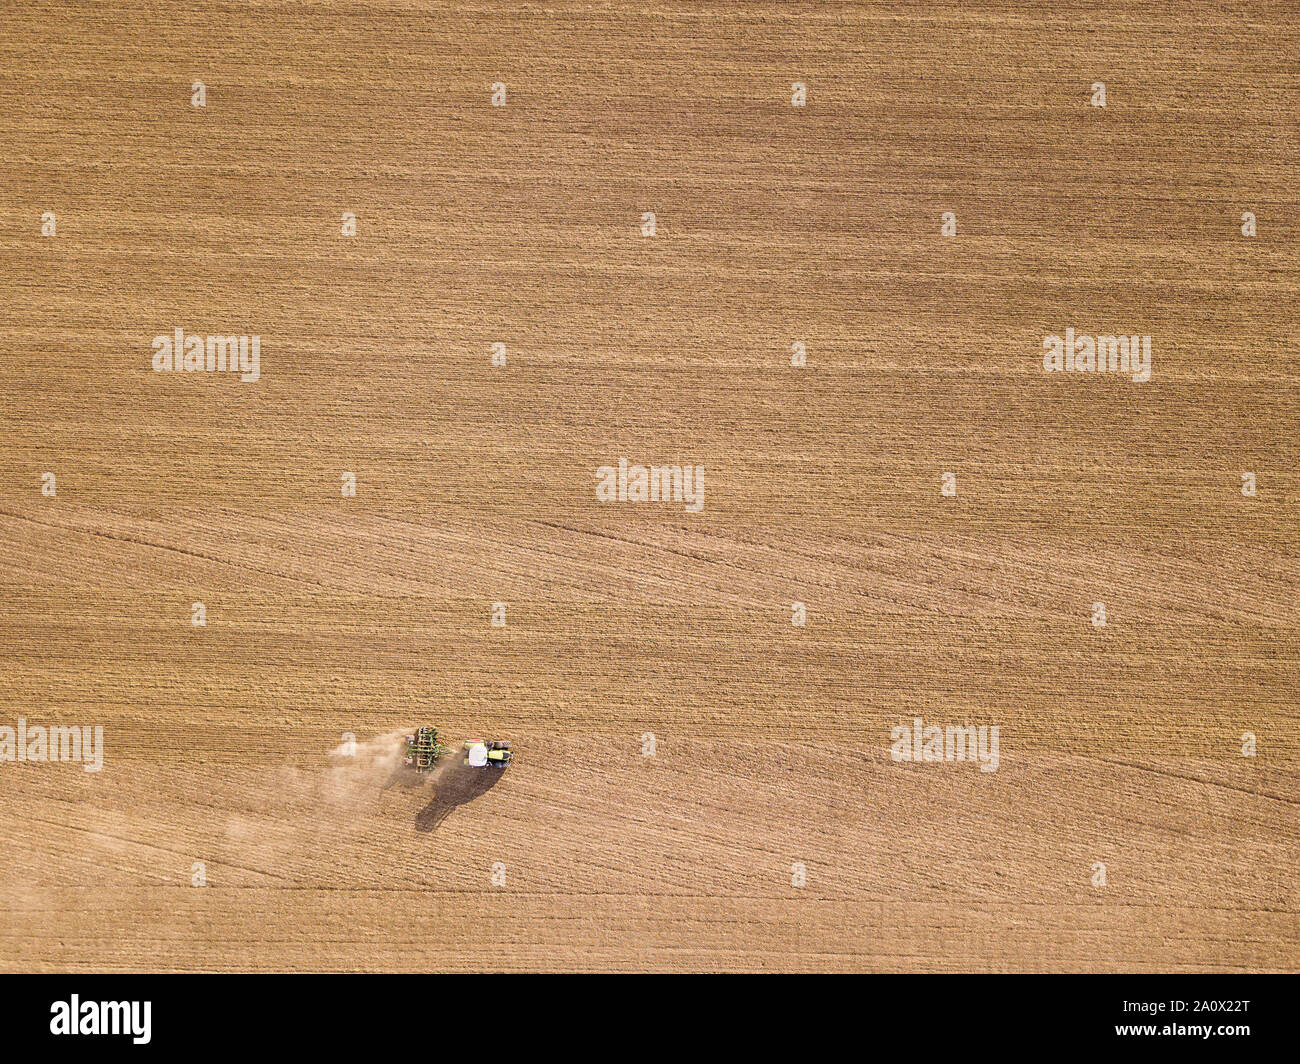 Tractor ploughing / global warning - bone dry field Stock Photo